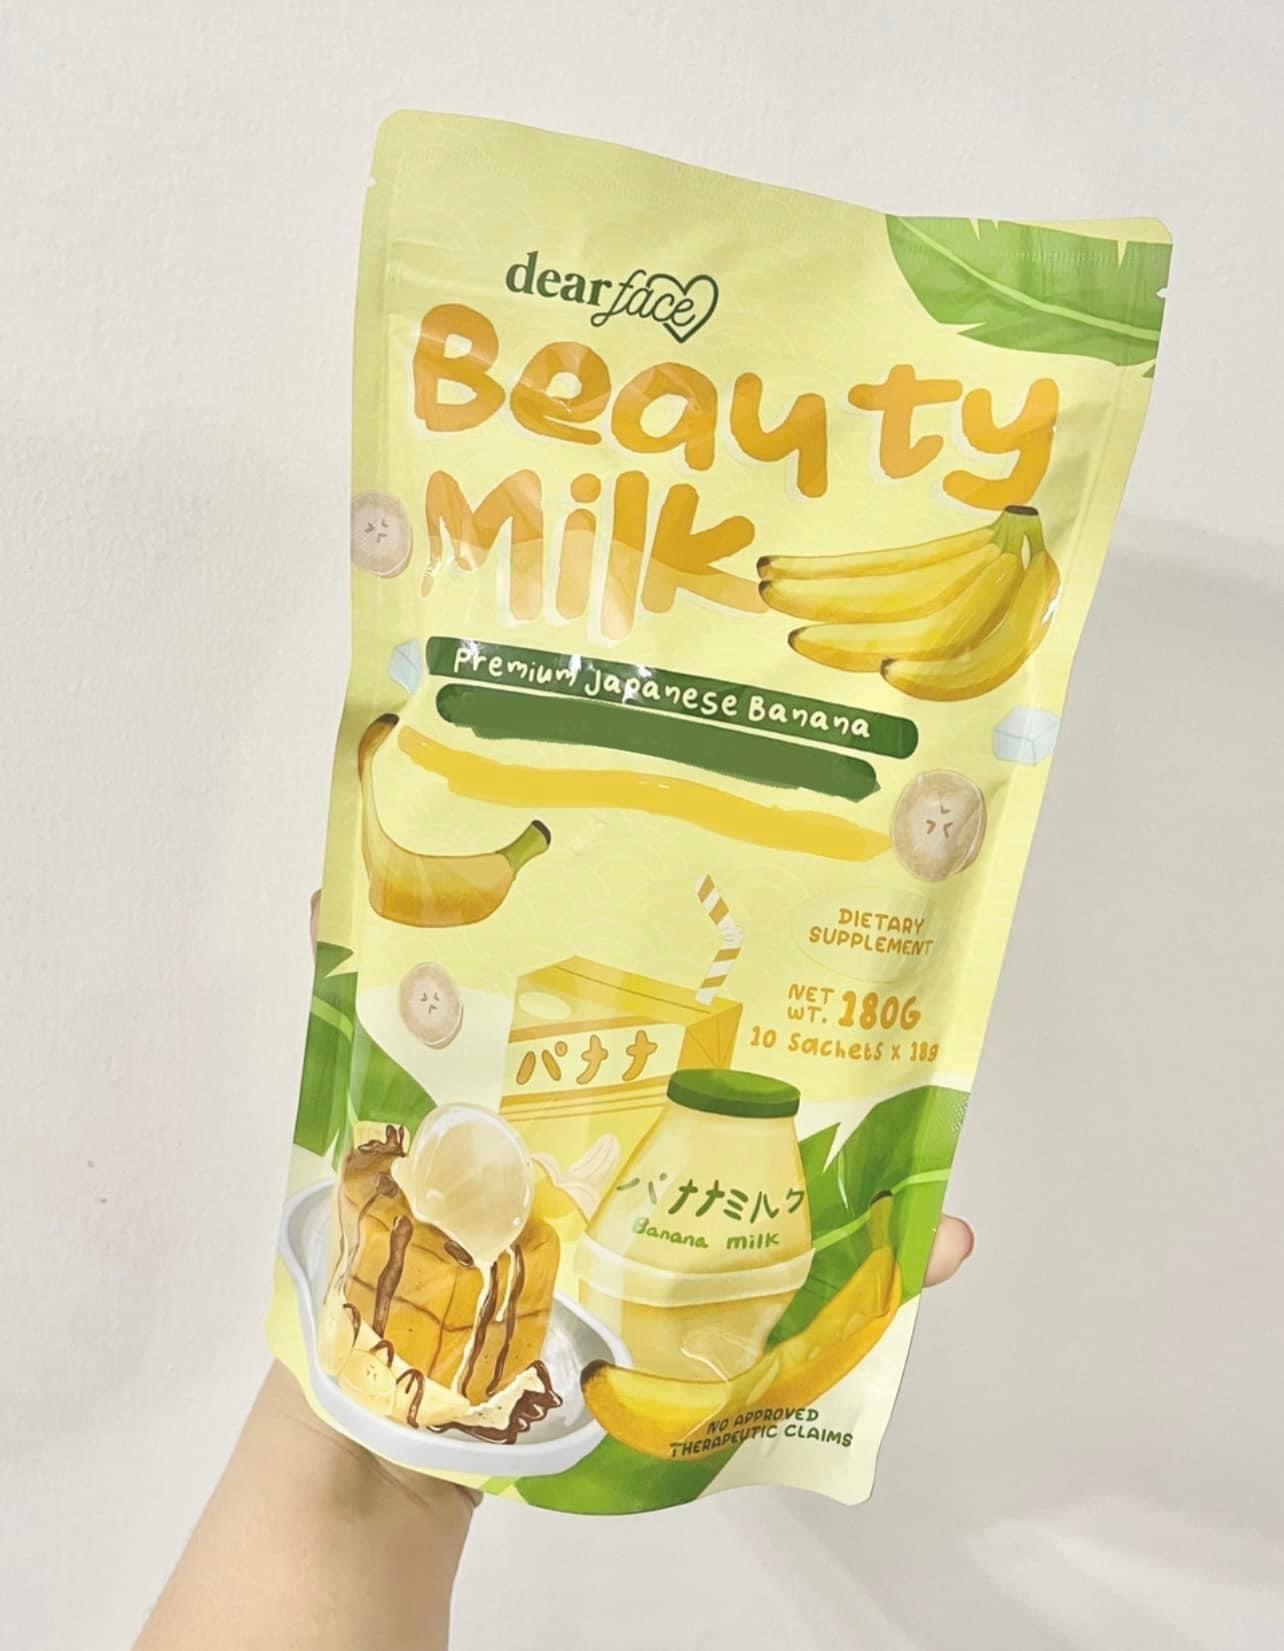 Dear Face Beauty Milk - Banana Probiotic + Collagen Drink